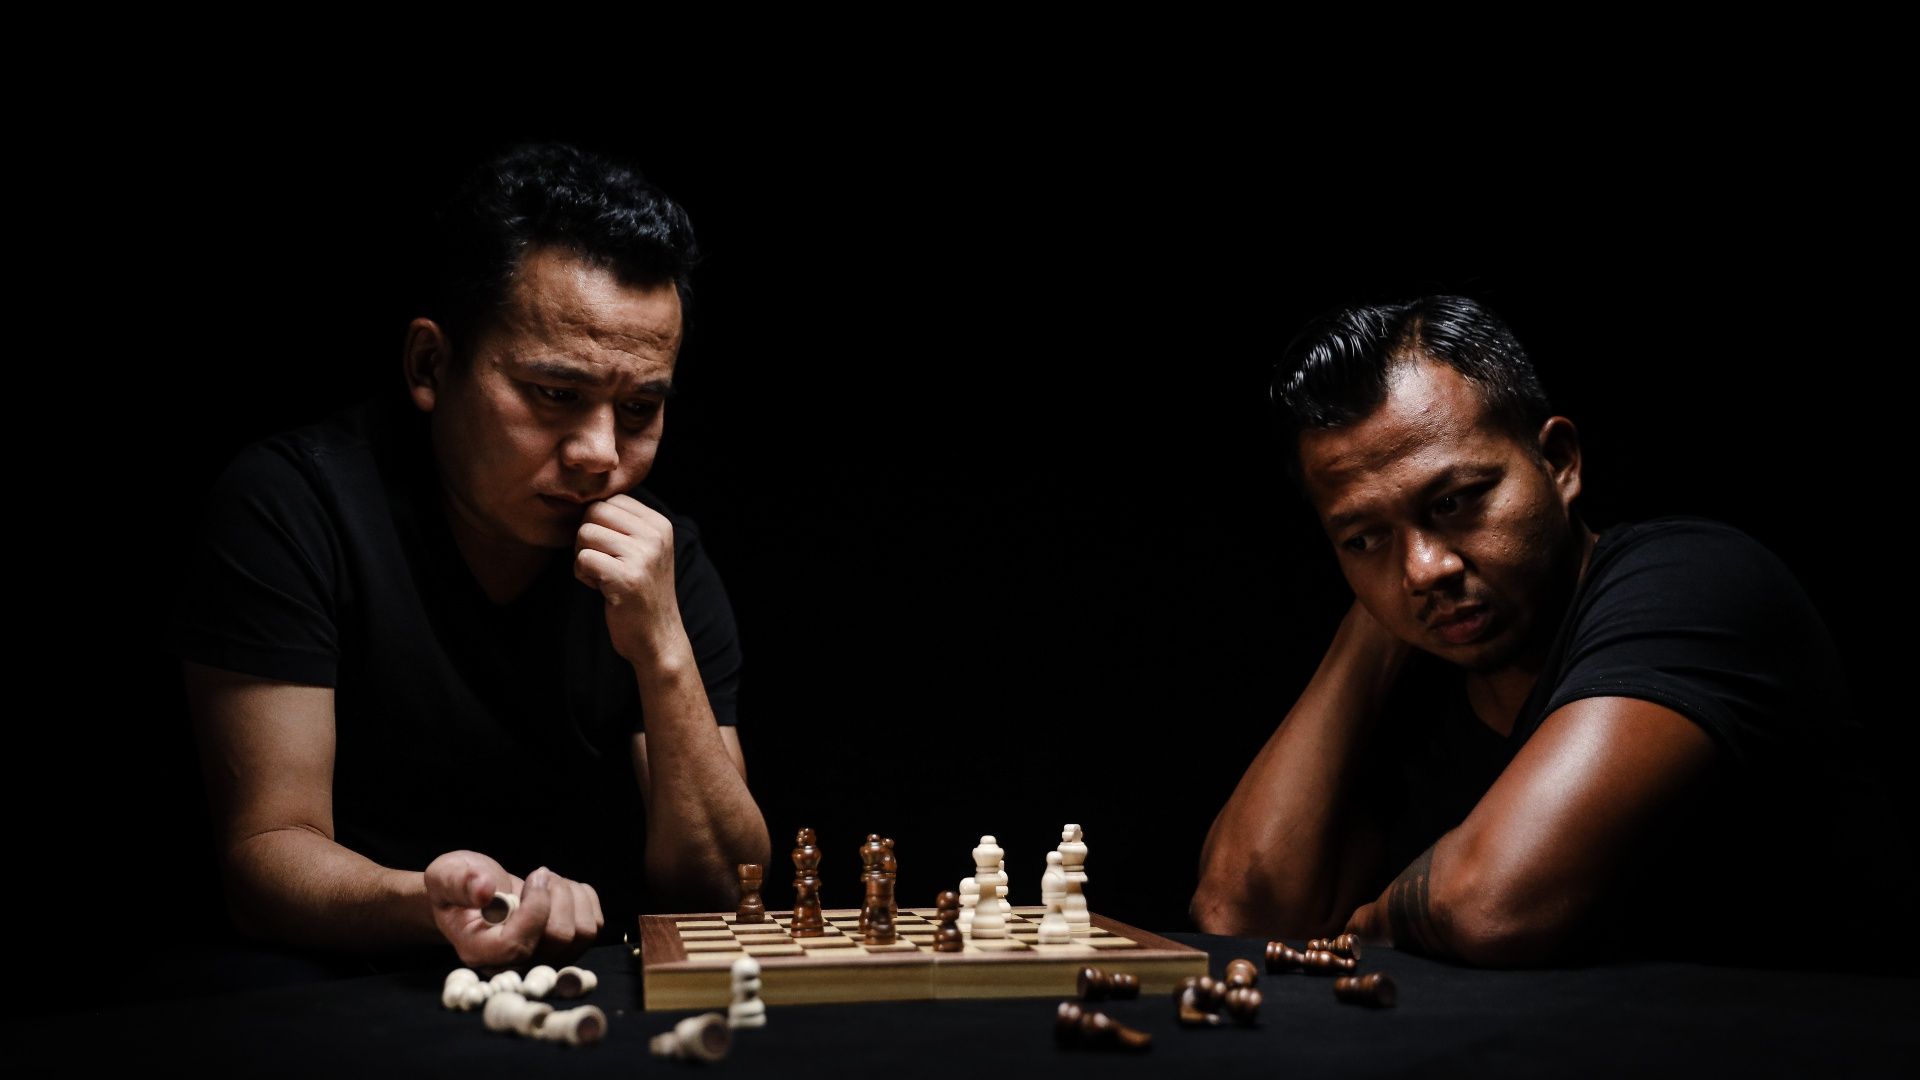 Image of cristiano ronaldo playing chess with obama